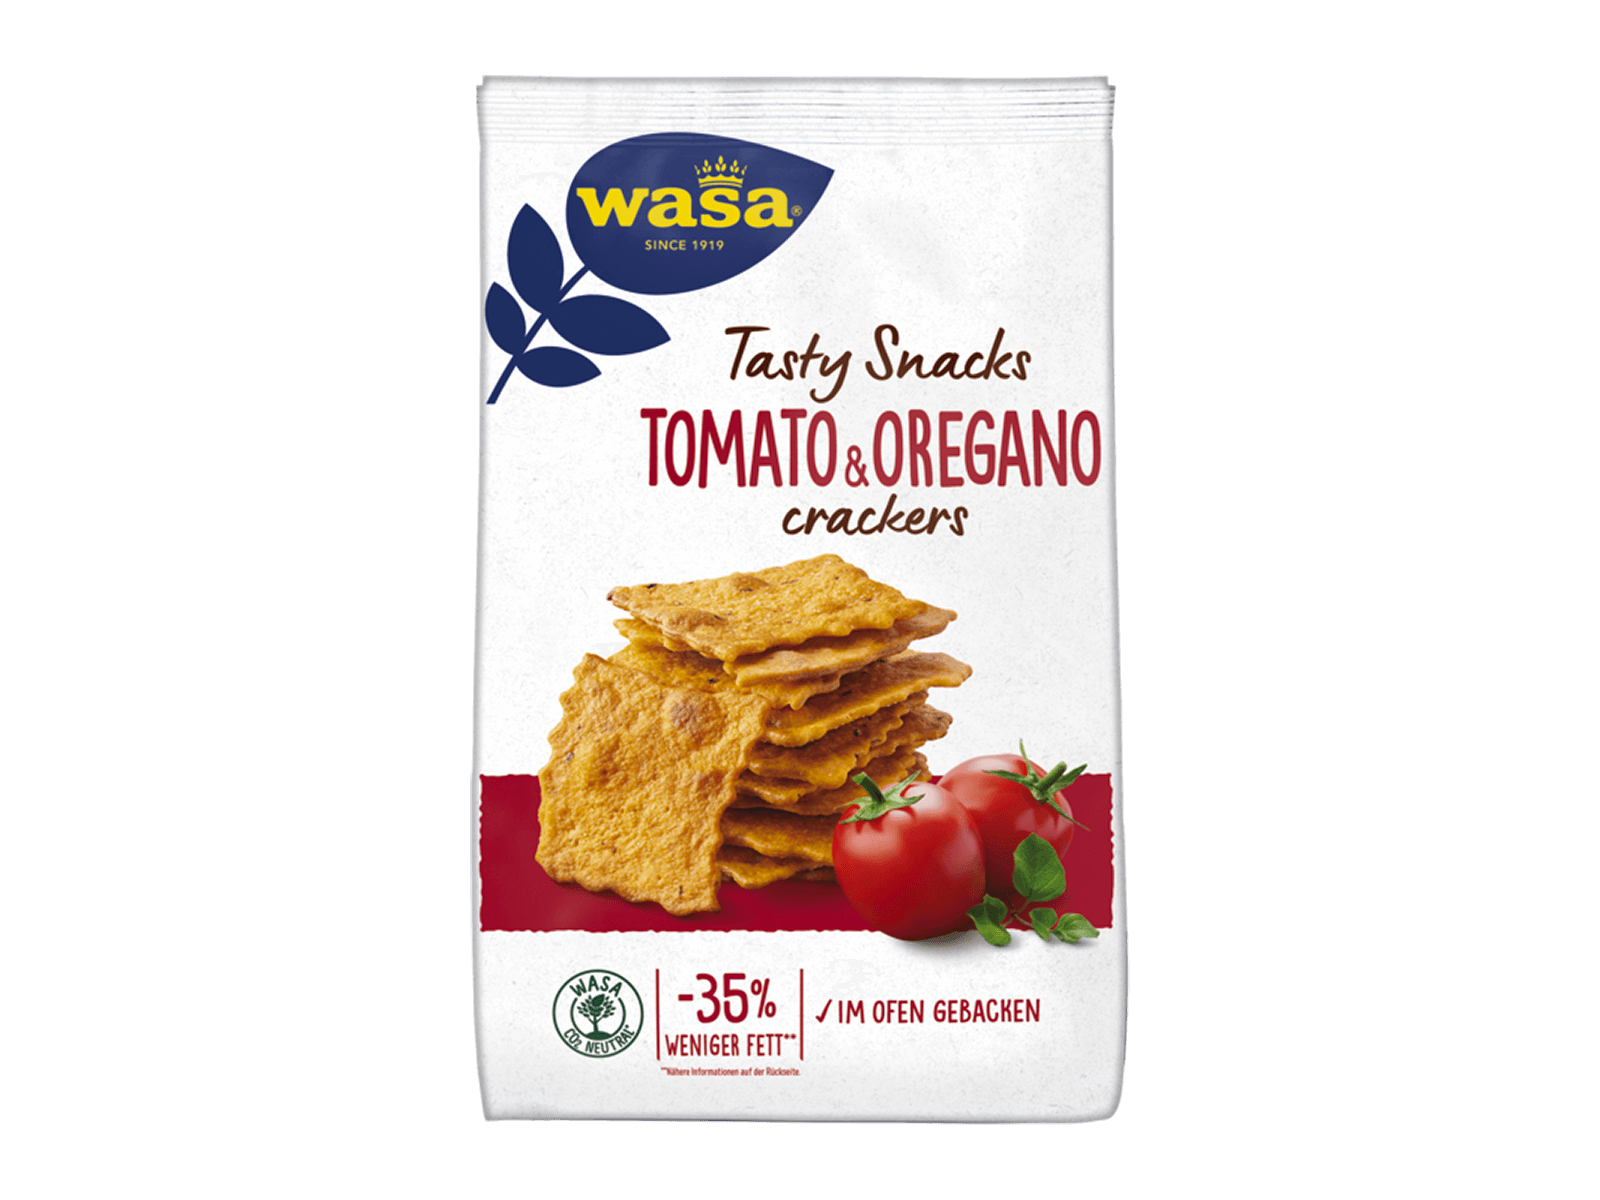 Tasty Snacks Crackers Tomato & Oregano